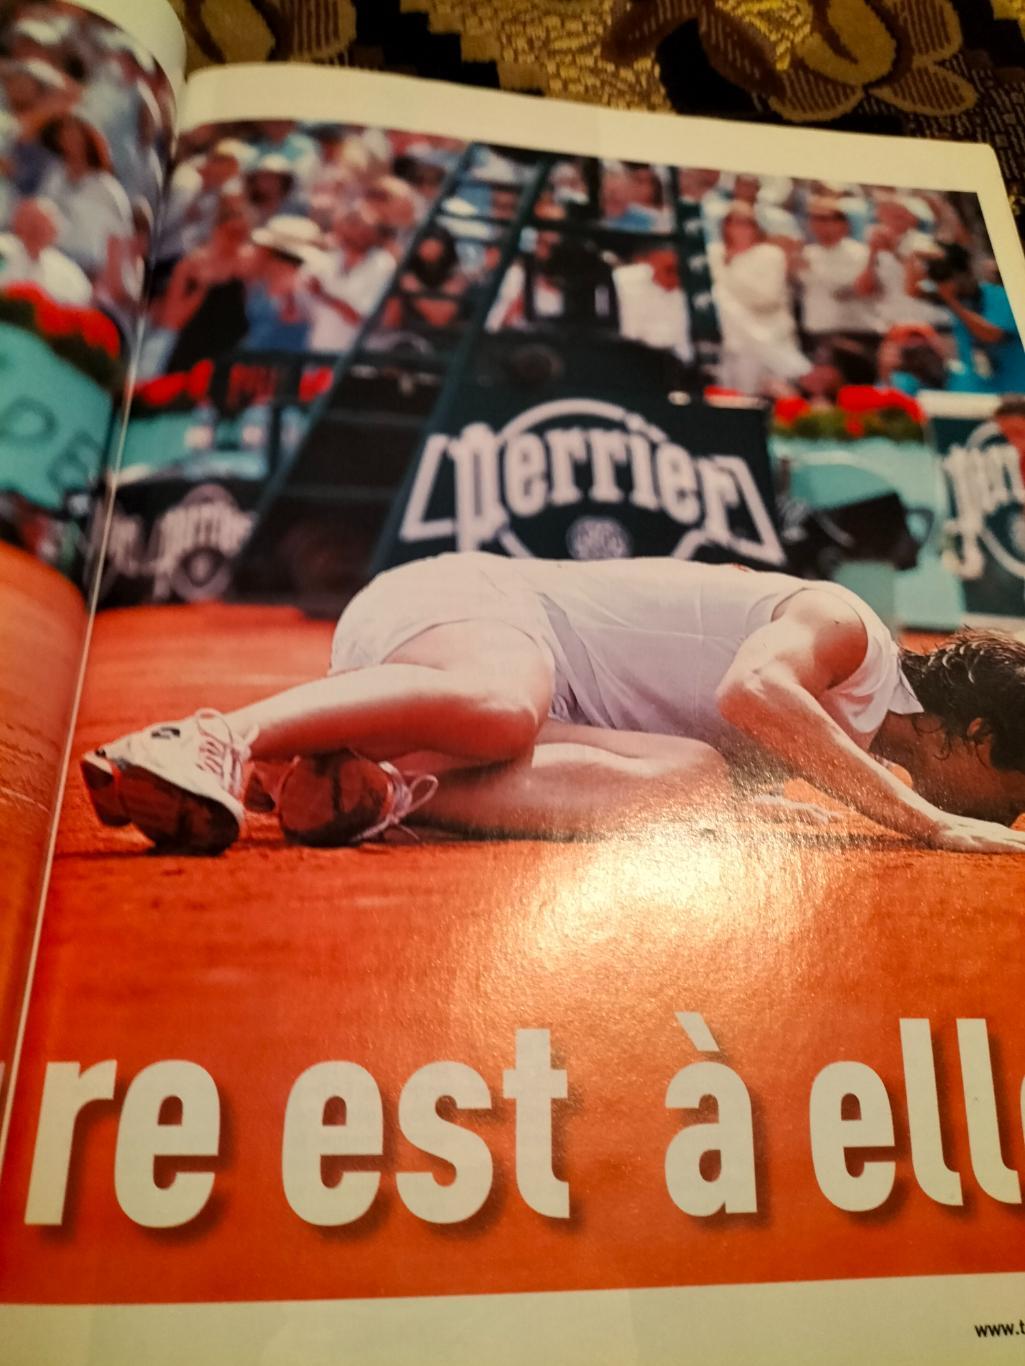 Французский журнал Tennis magazine 2010 год про итоги Ролан Гаррос. 3